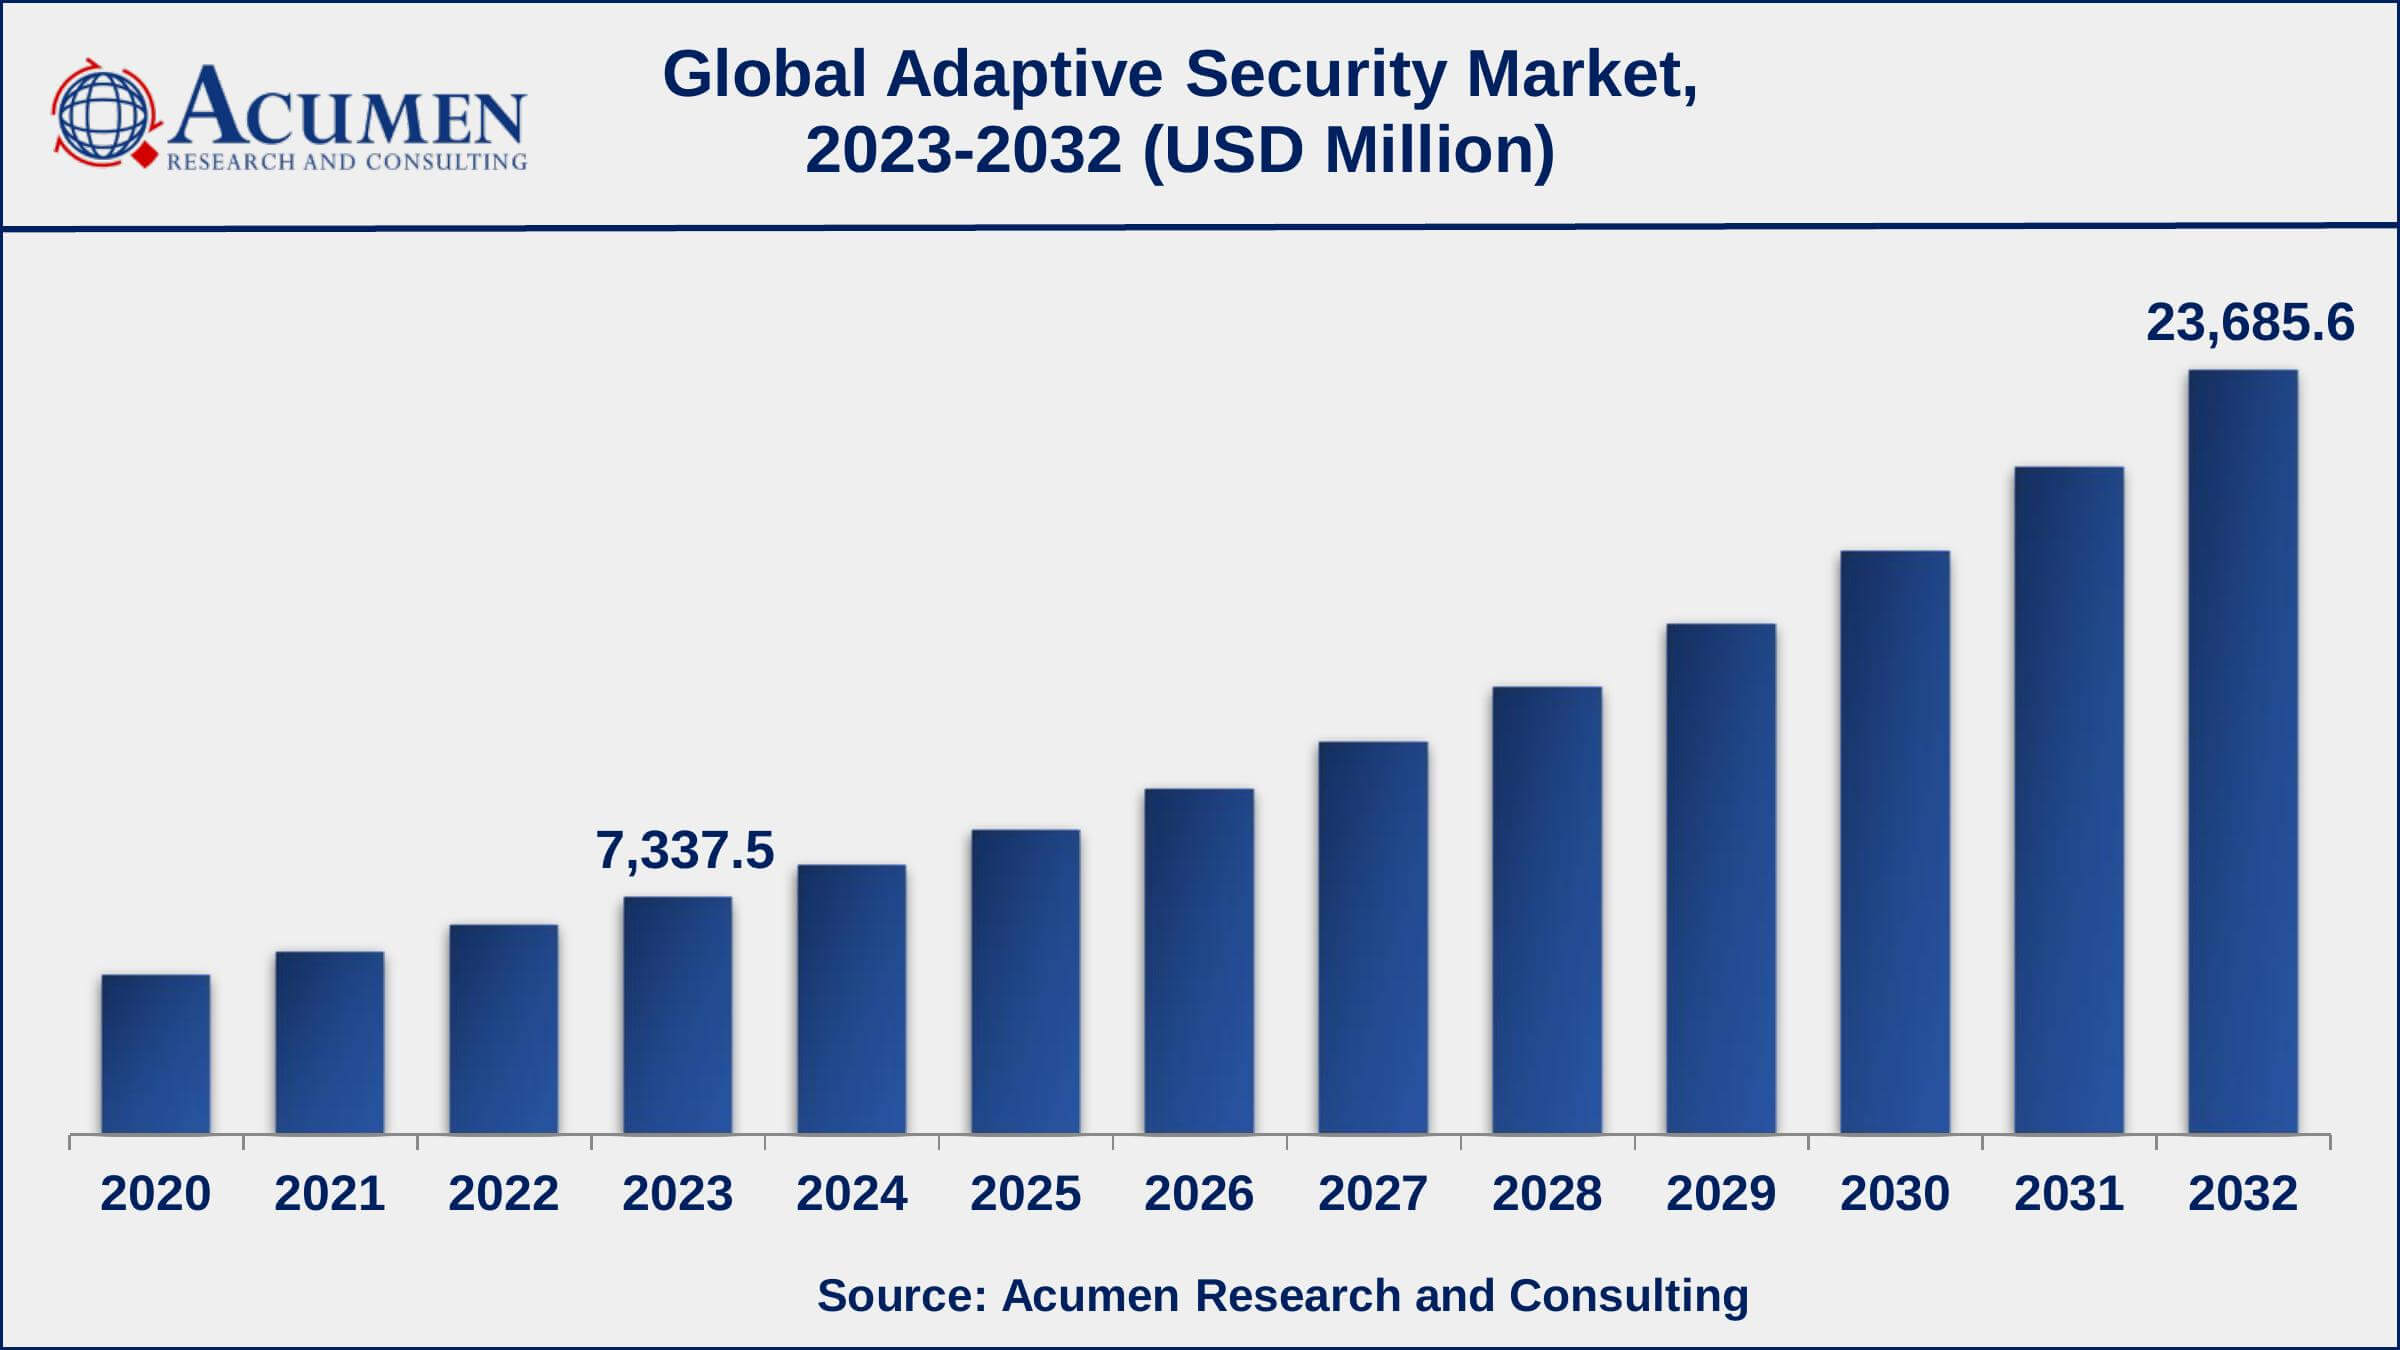 Global Adaptive Security Market Dynamics